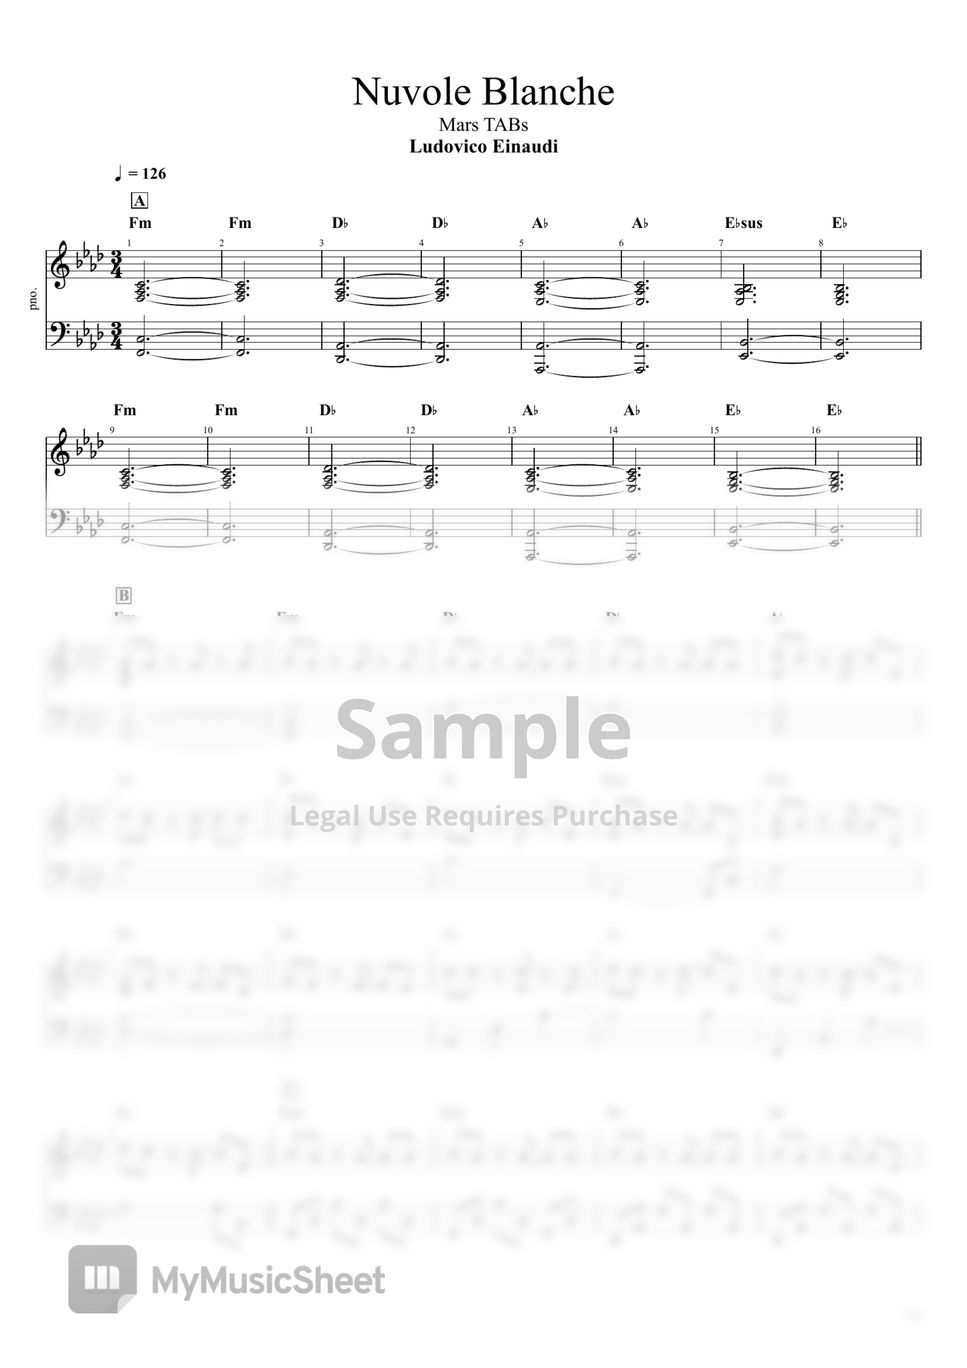 ludovico einaudi - nuvole bianche (Piano Sheet) by Mars TABs